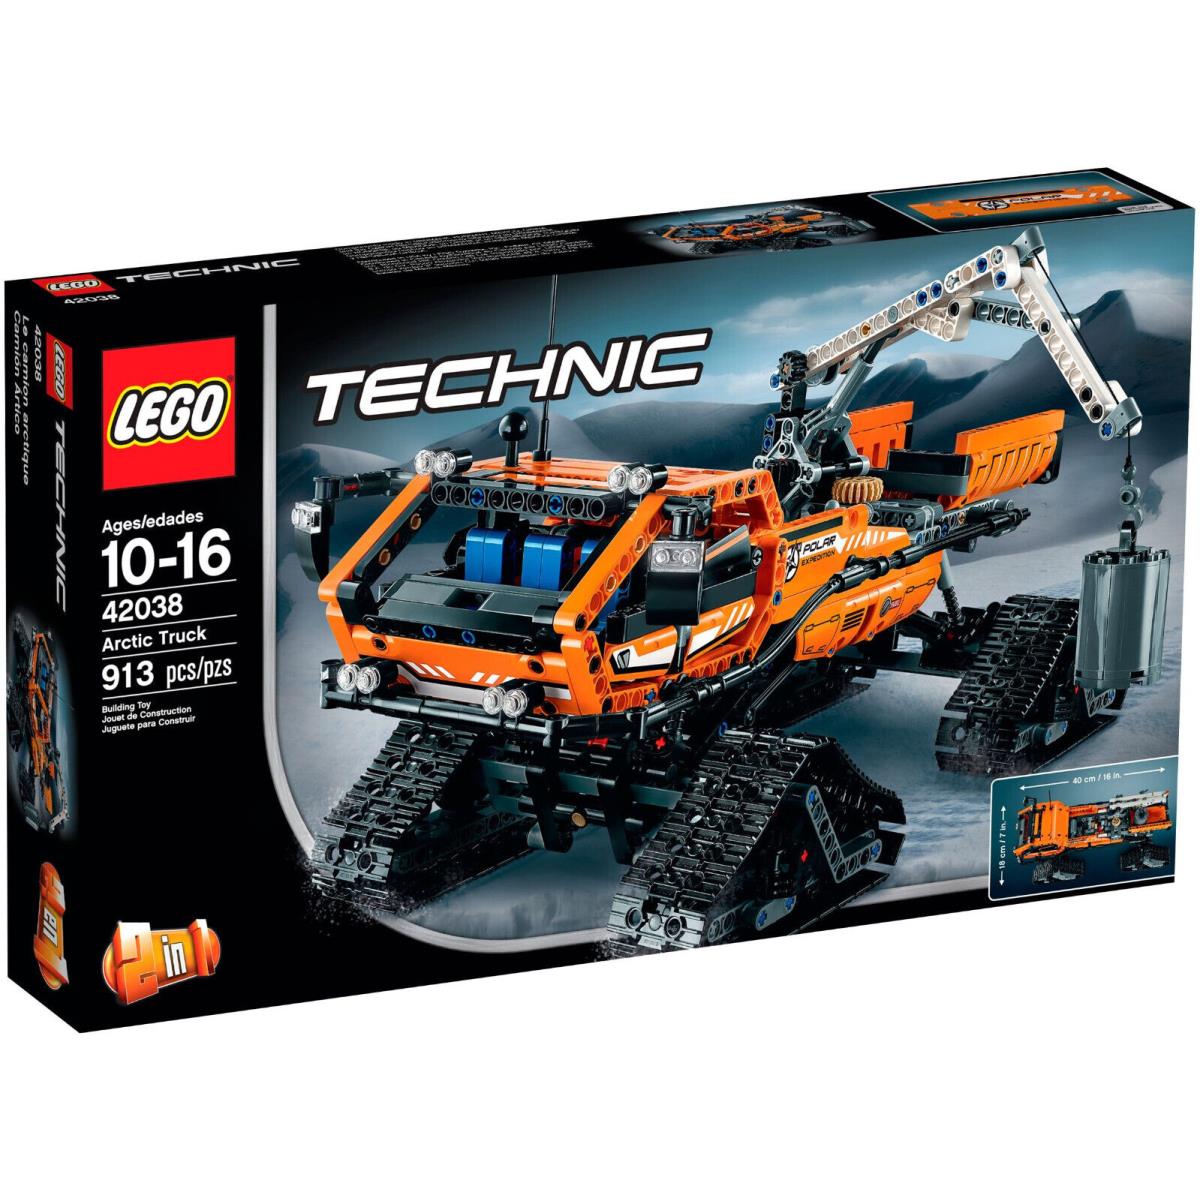 Lego Technic 42038 Artic Truck - - See Description